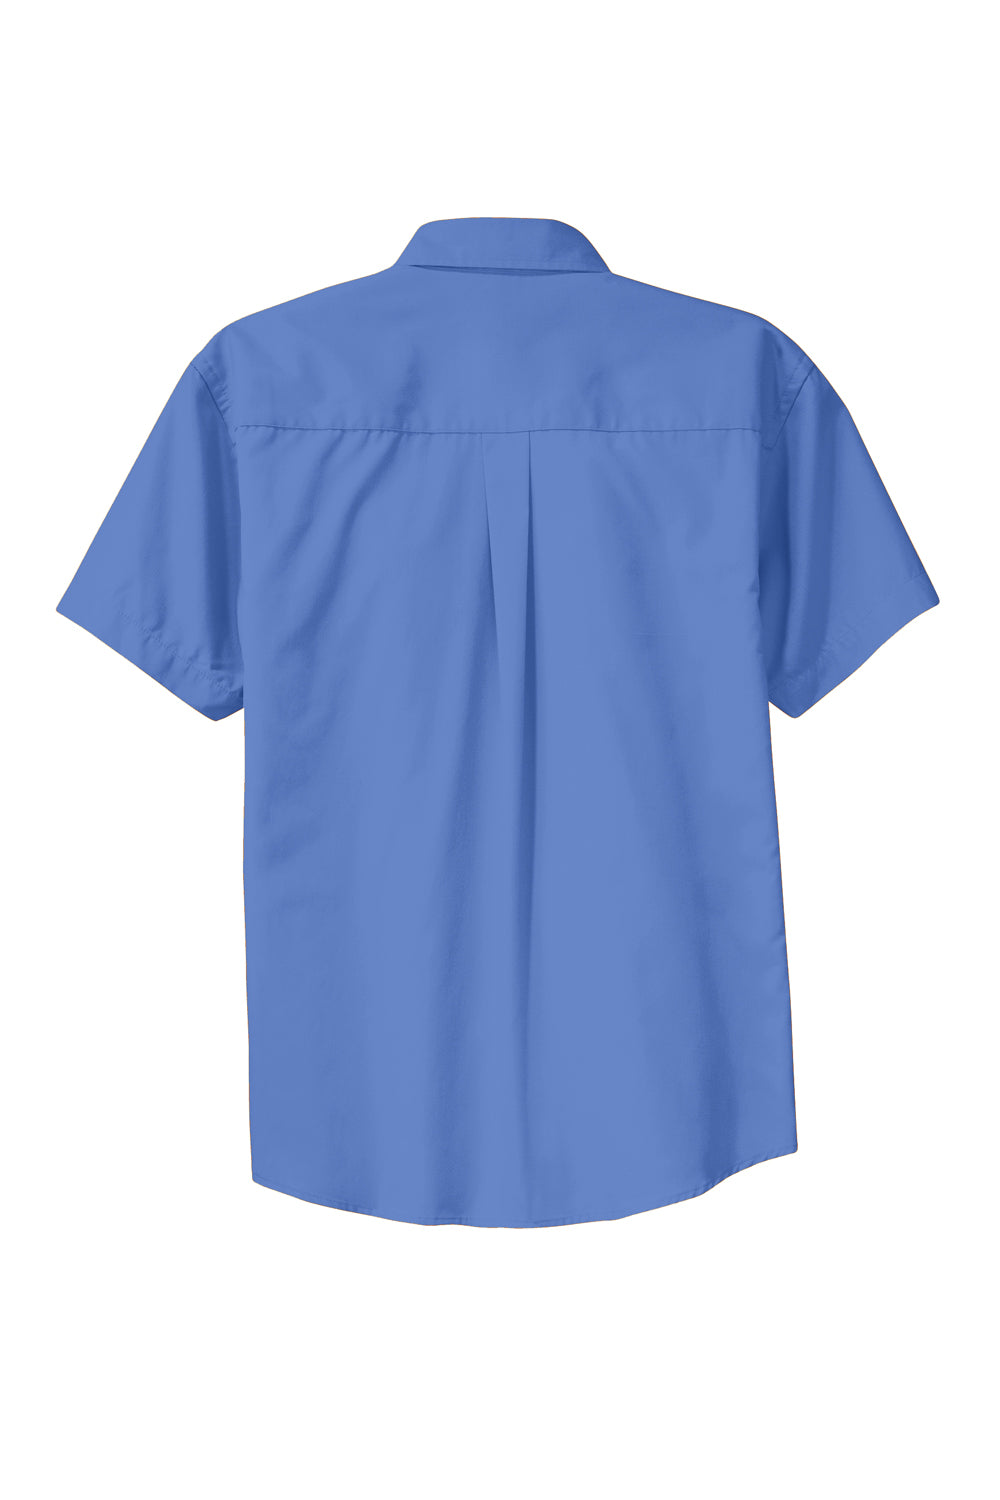 Port Authority S508/TLS508 Mens Easy Care Wrinkle Resistant Short Sleeve Button Down Shirt w/ Pocket Ultramarine Blue Flat Back